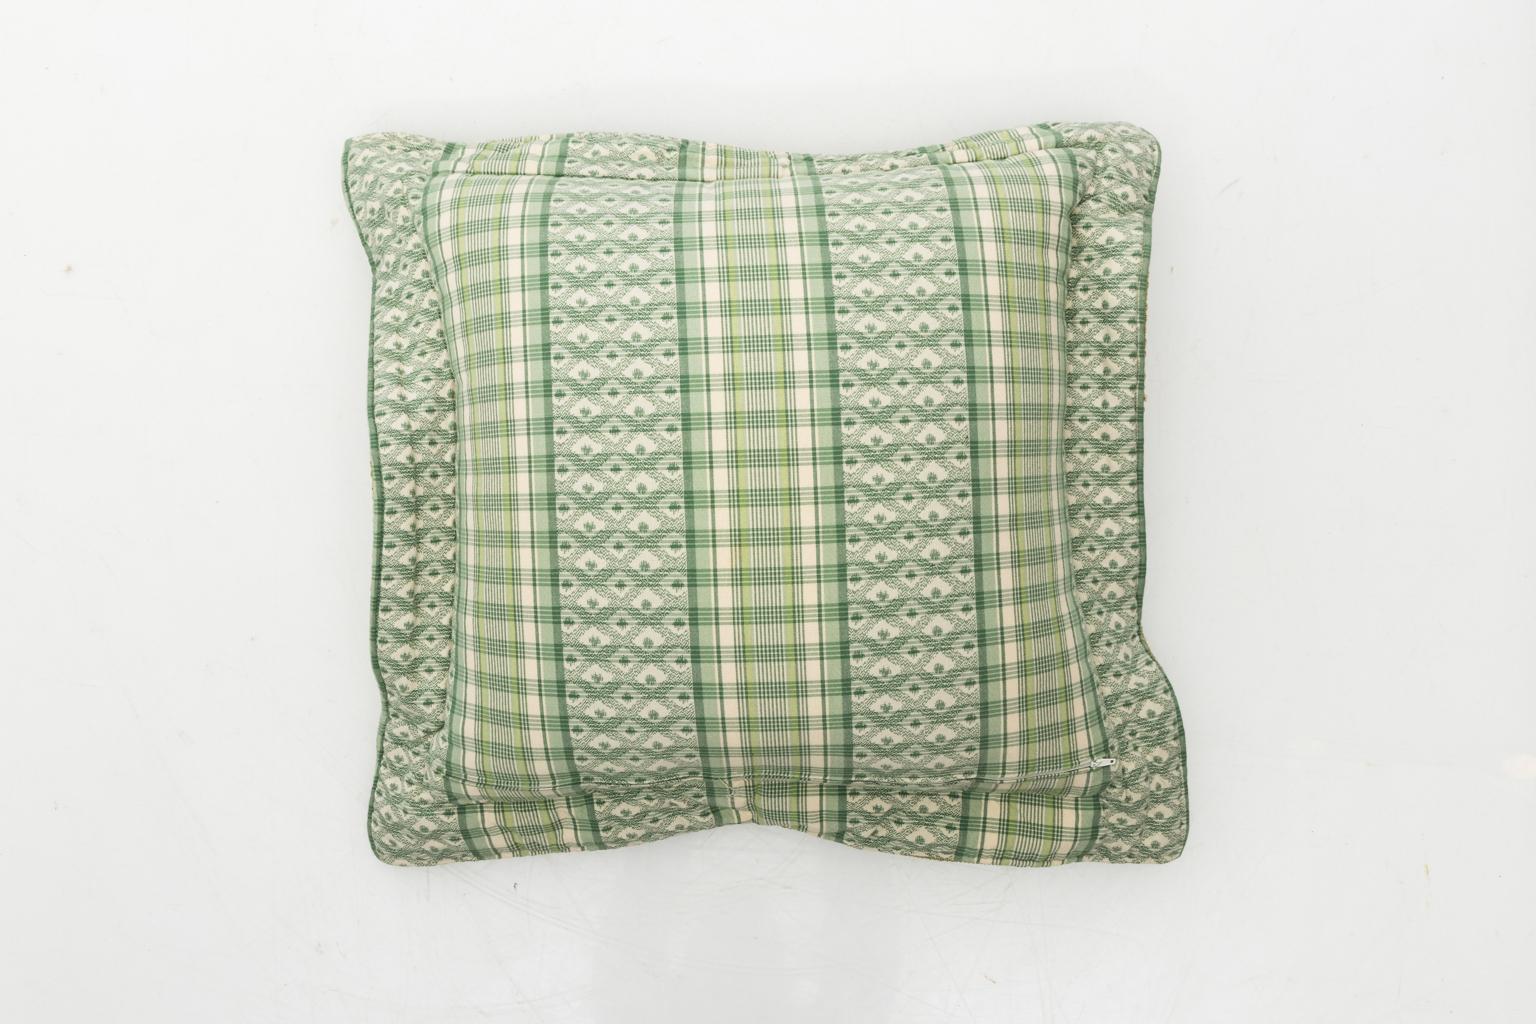 Pair of decorative green and white Cowtan & Tout pillows.
 